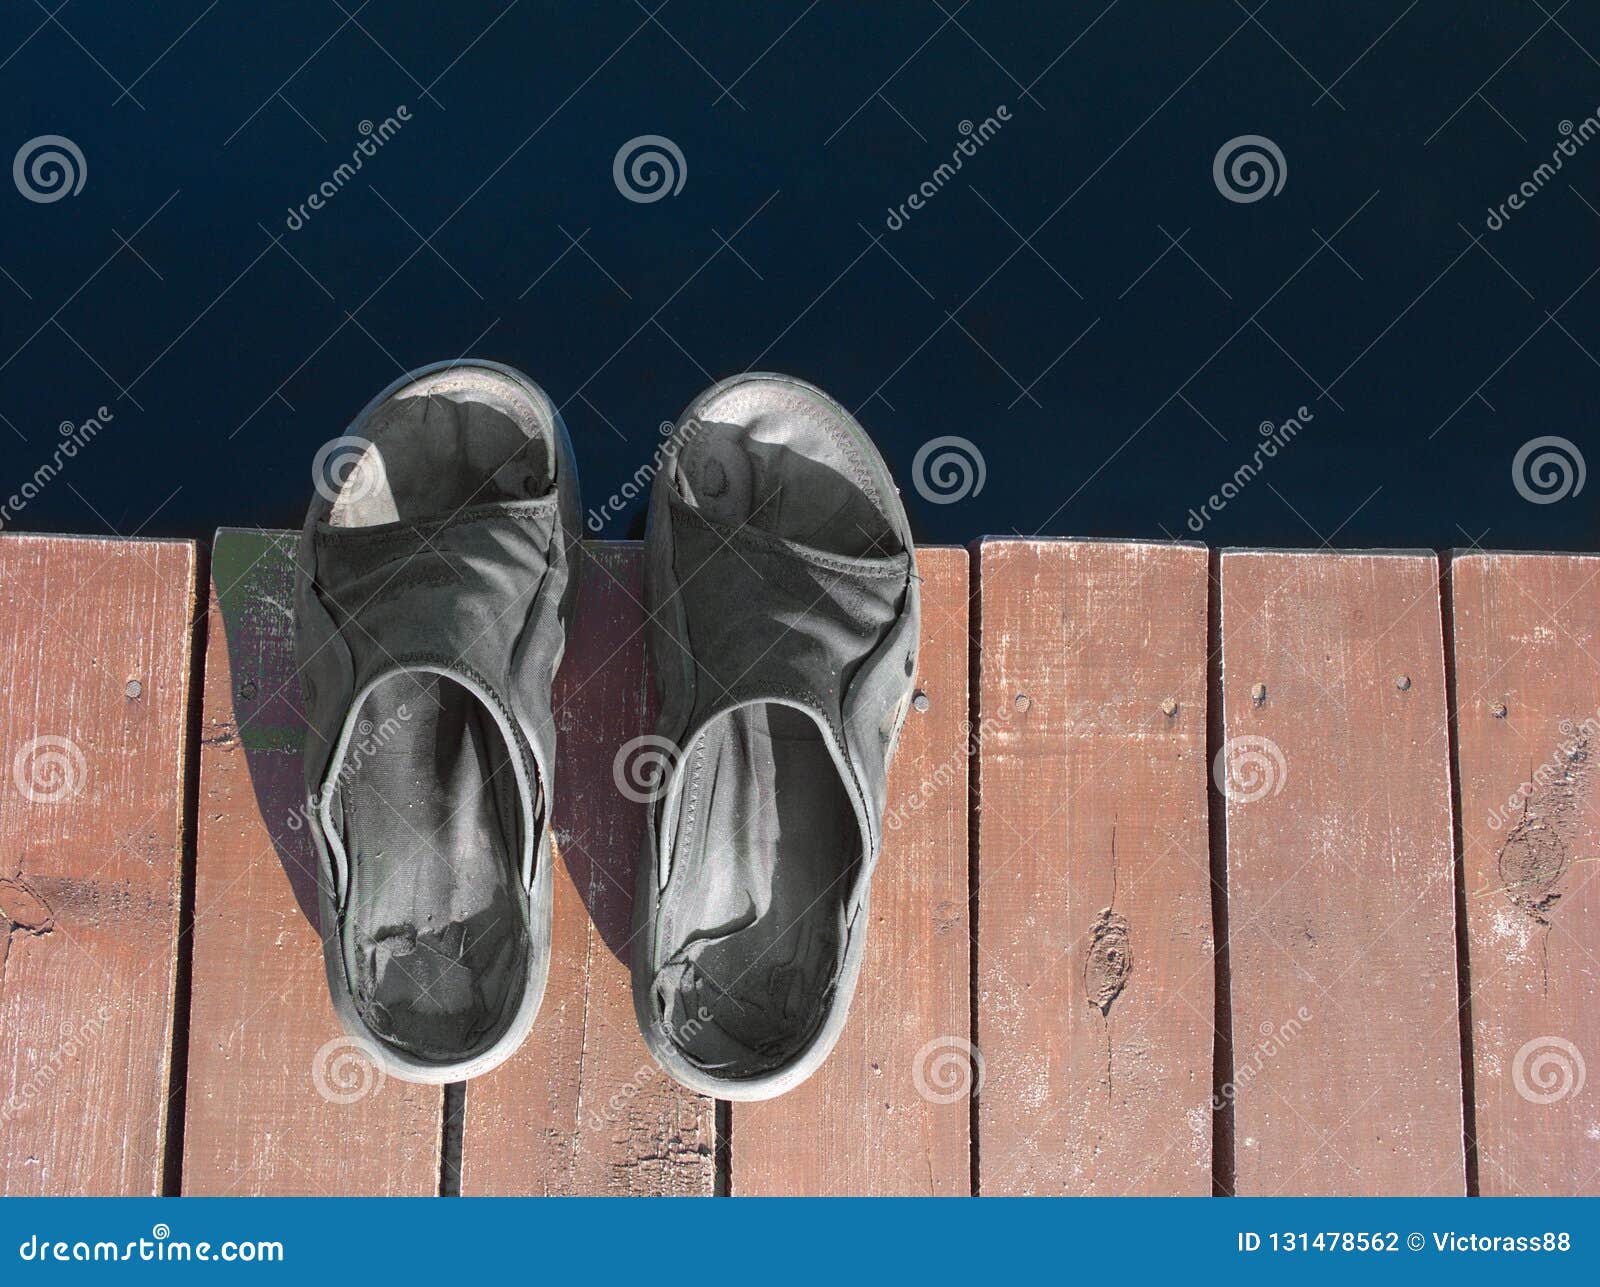 Sandals on a wooden bridge stock photo. Image of bridge - 131478562